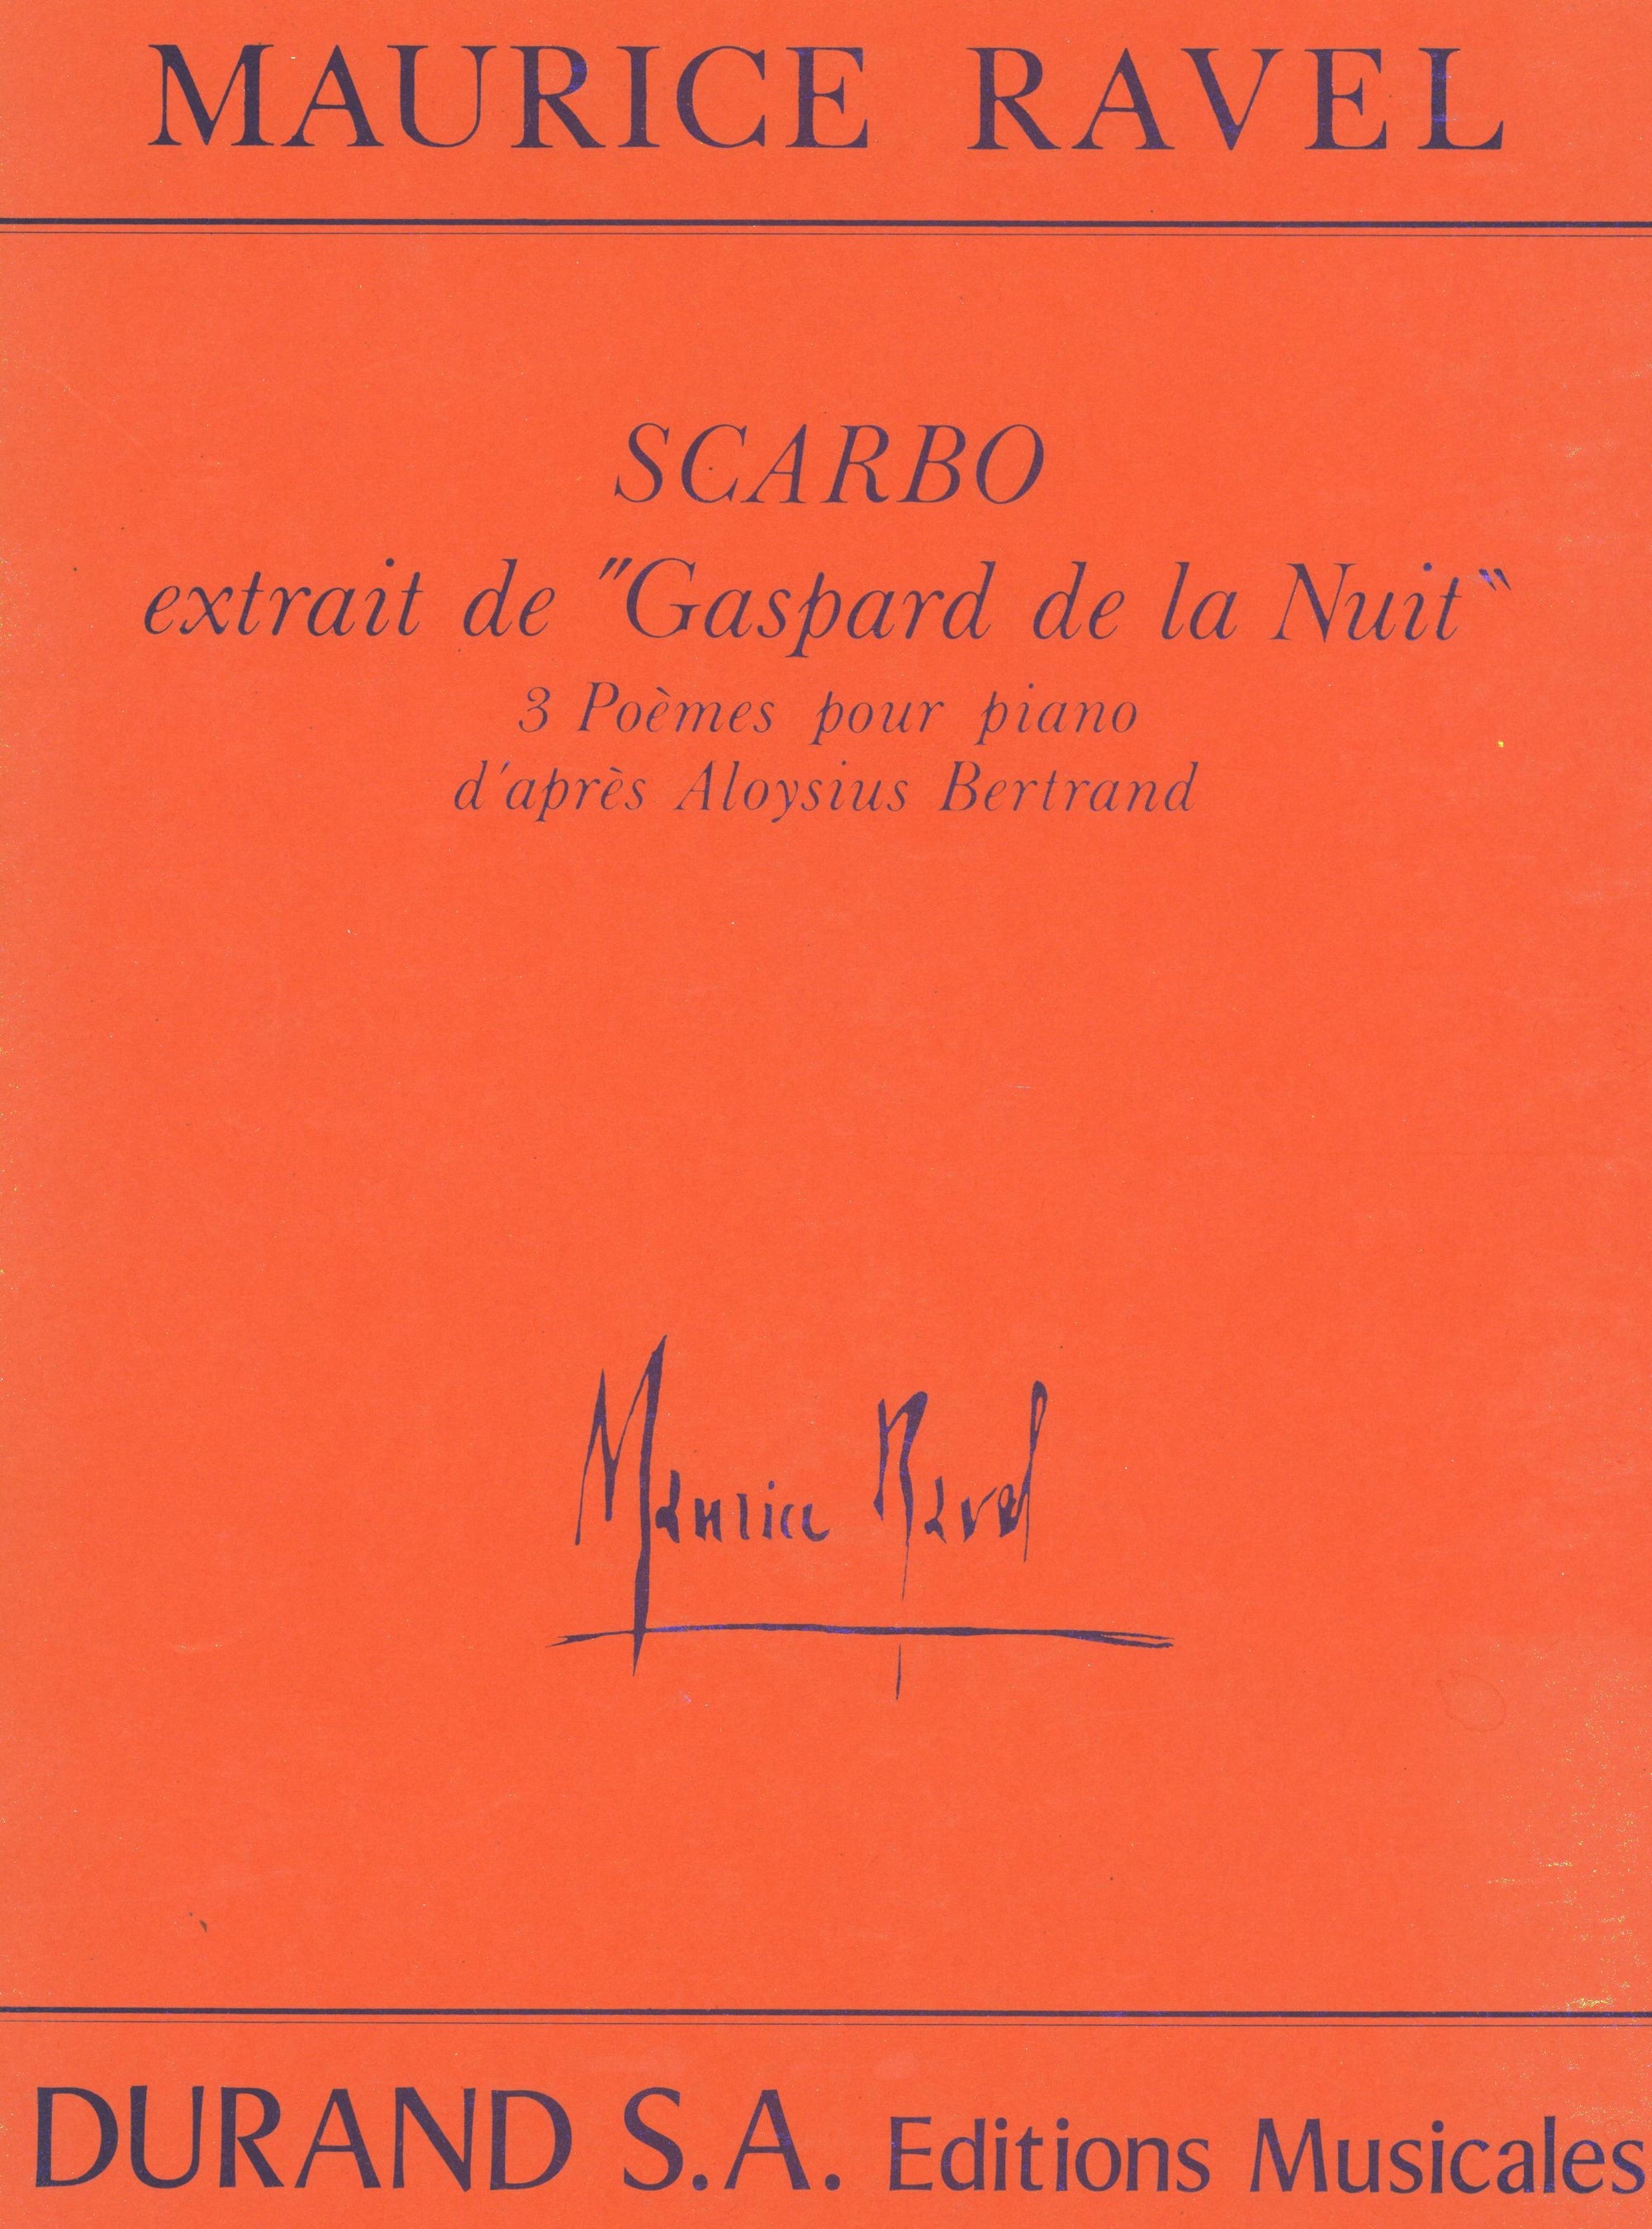 Ravel: Scarbo from Gaspard de la Nuit